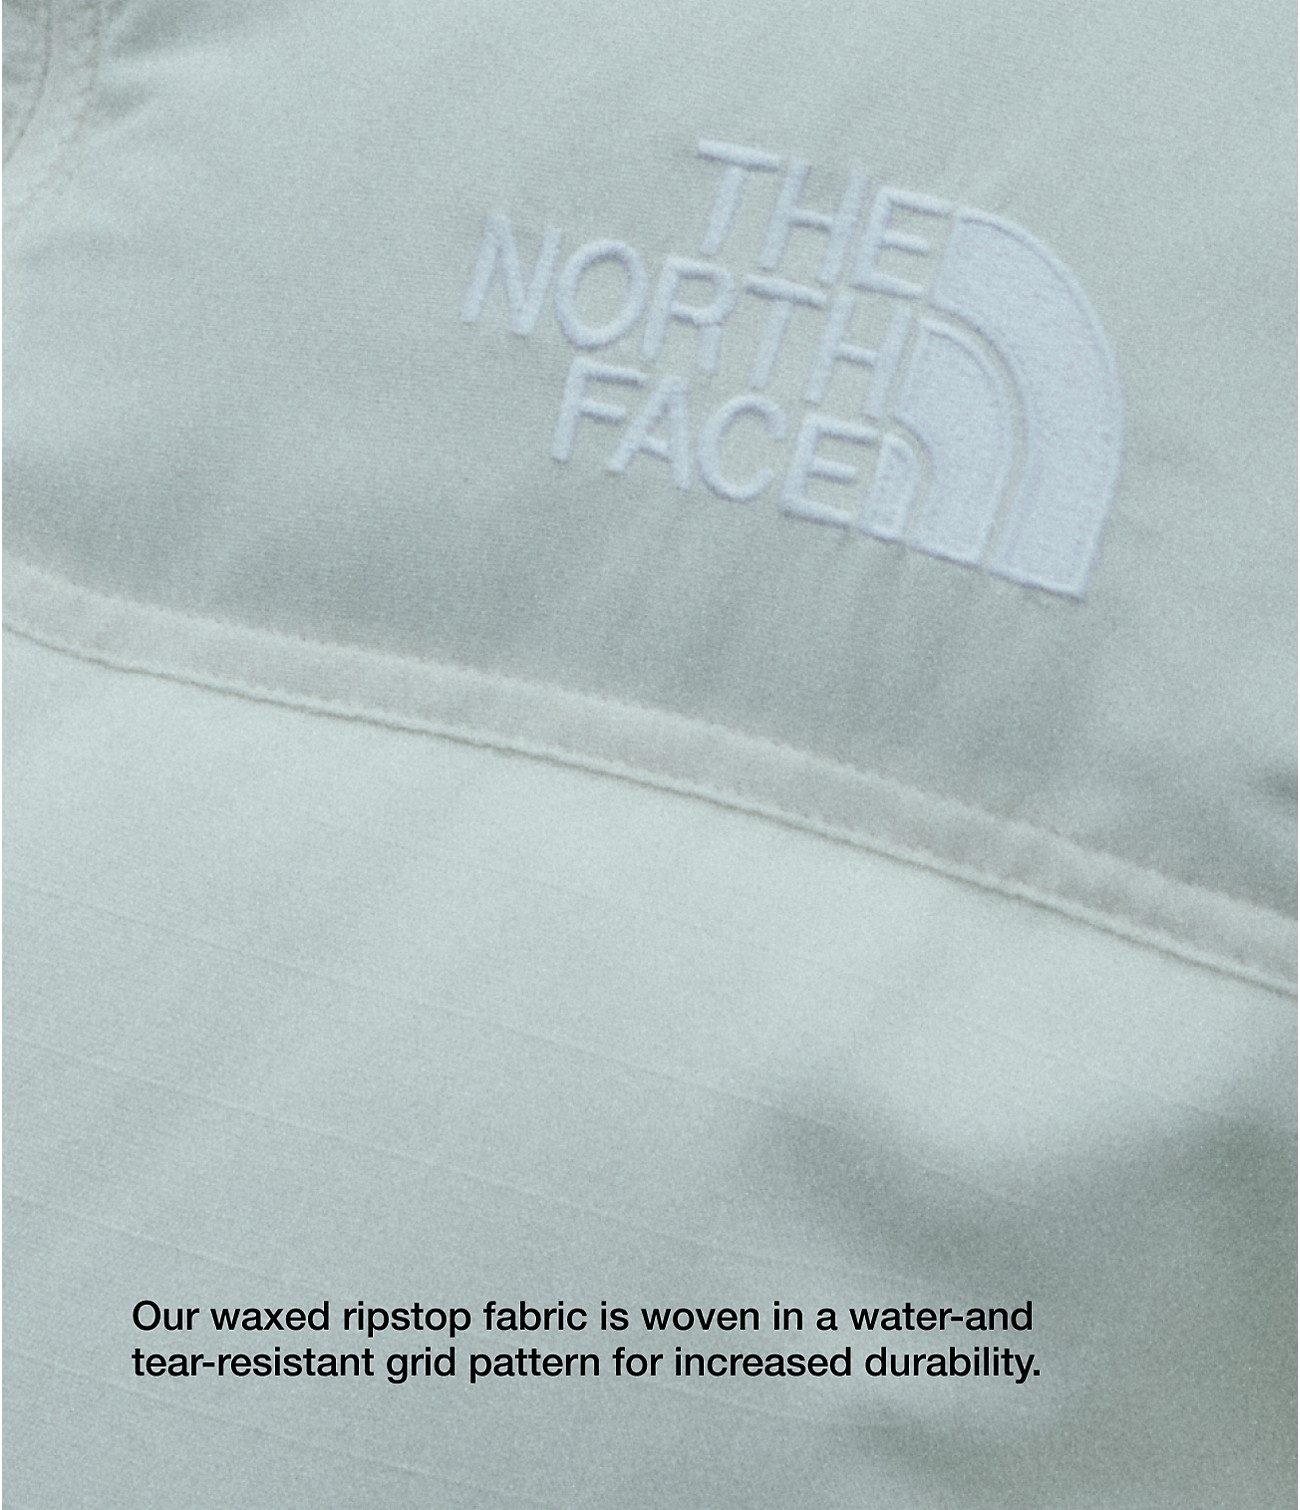 Women’s ’92 Ripstop Nuptse Jacket | The North Face